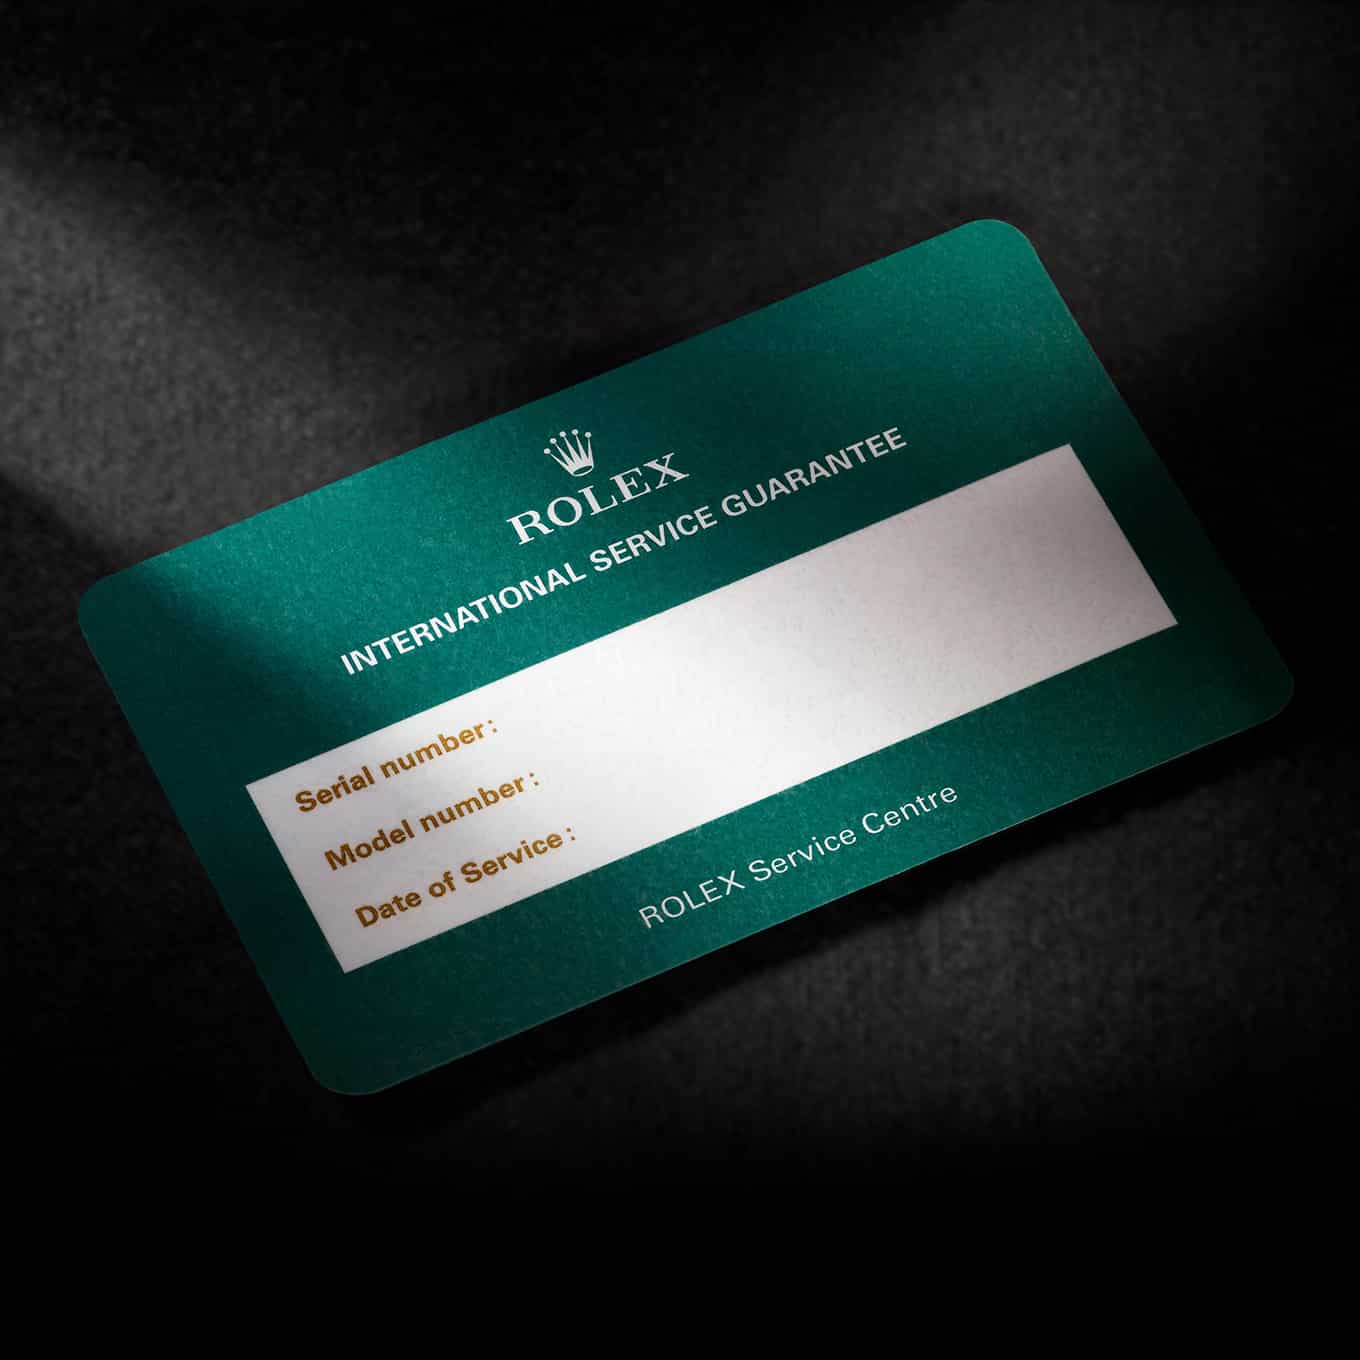 Rolex service guarantee card